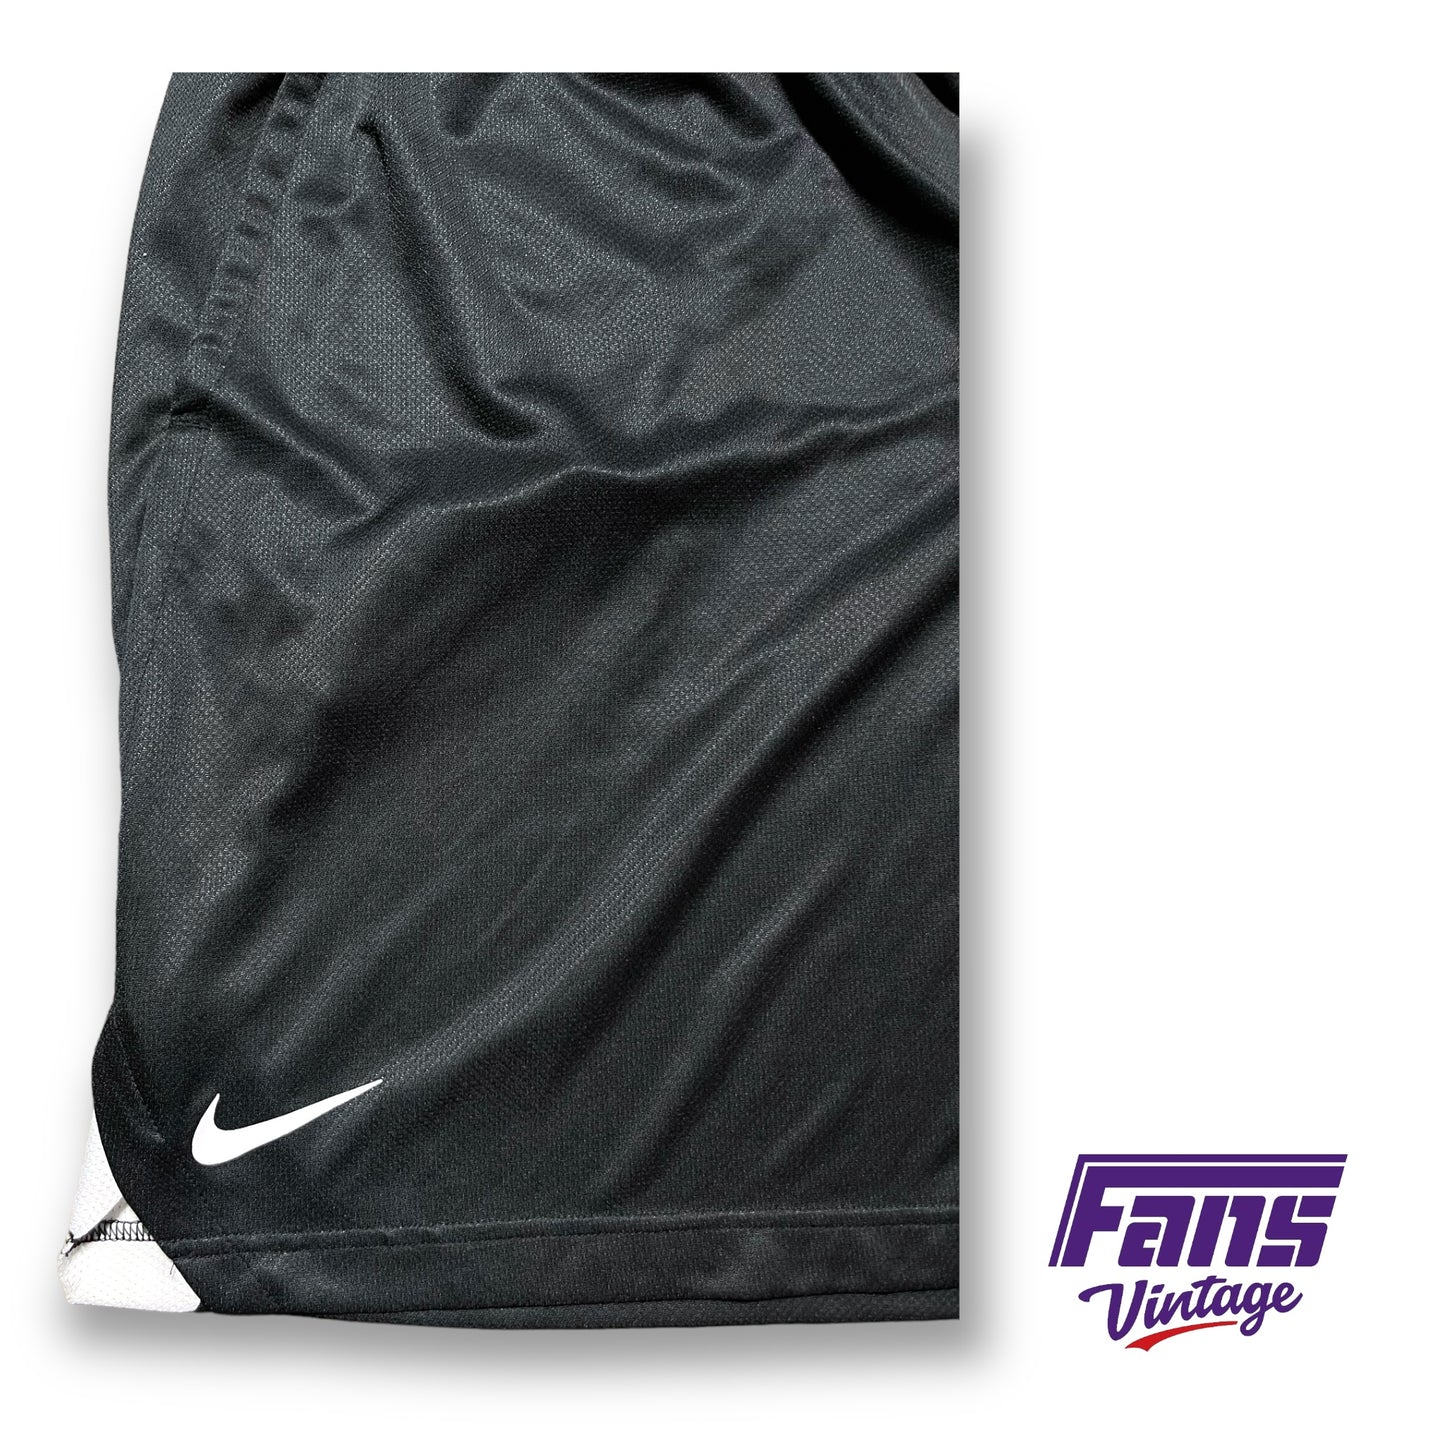 TCU Baseball Team Issue - Player Worn Nike Drifit Premium Training Shorts